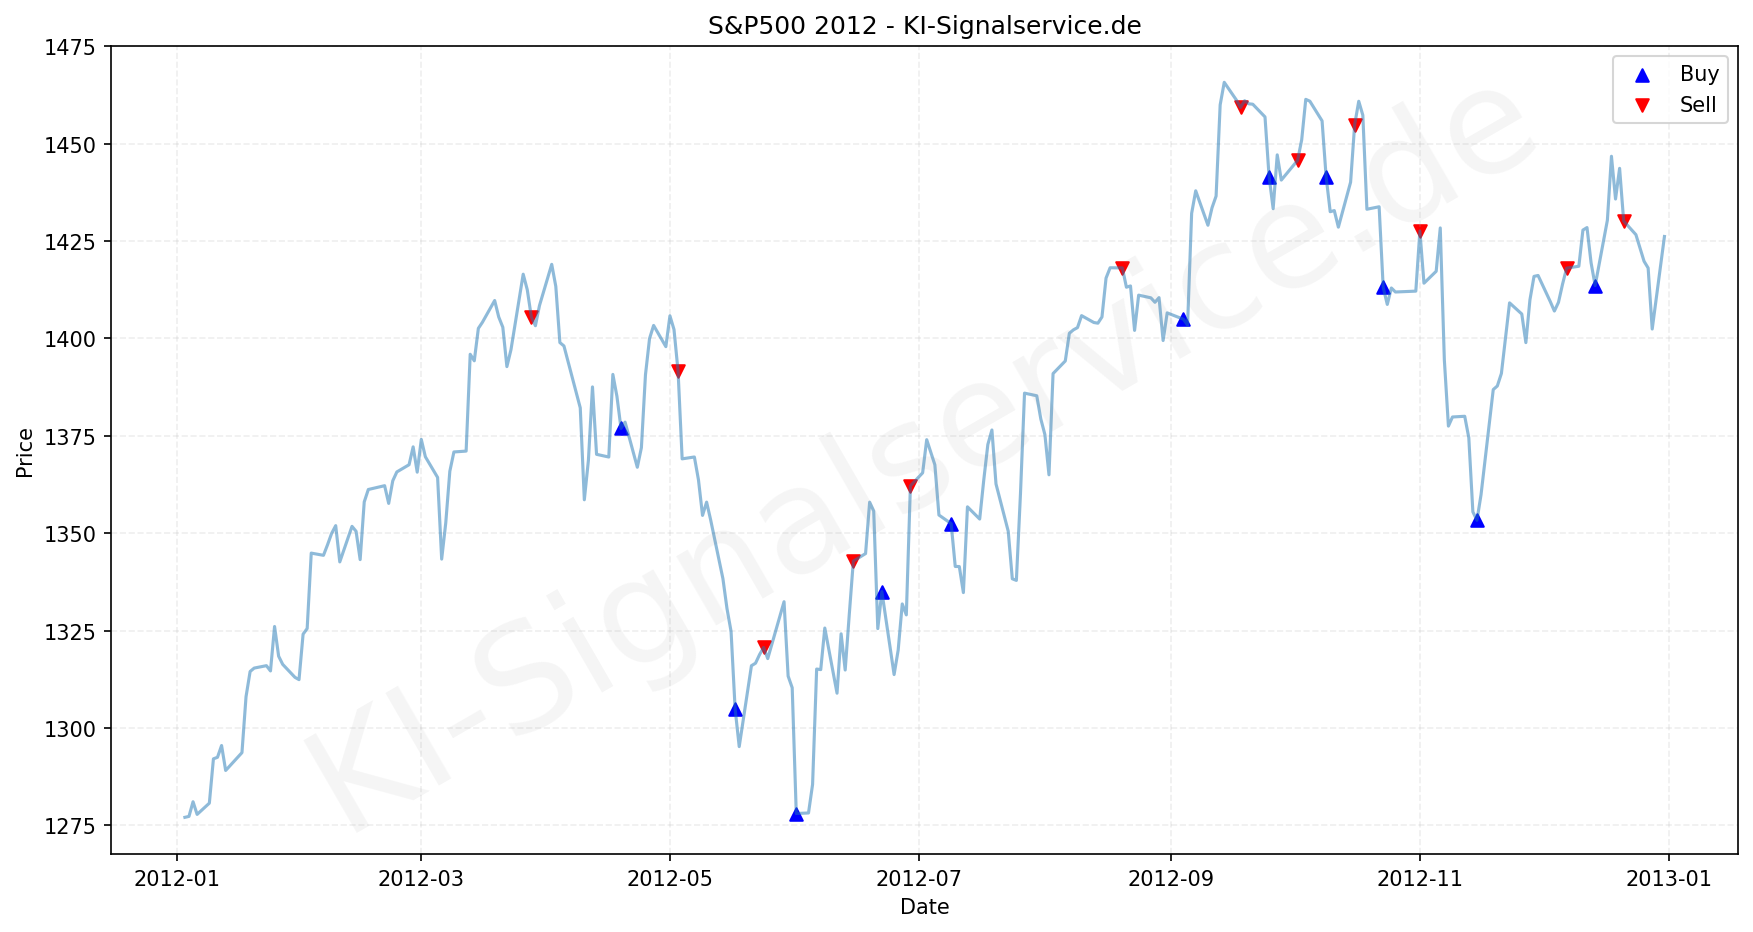 SP500 Index Performance Chart - KI Tradingsignale 2012